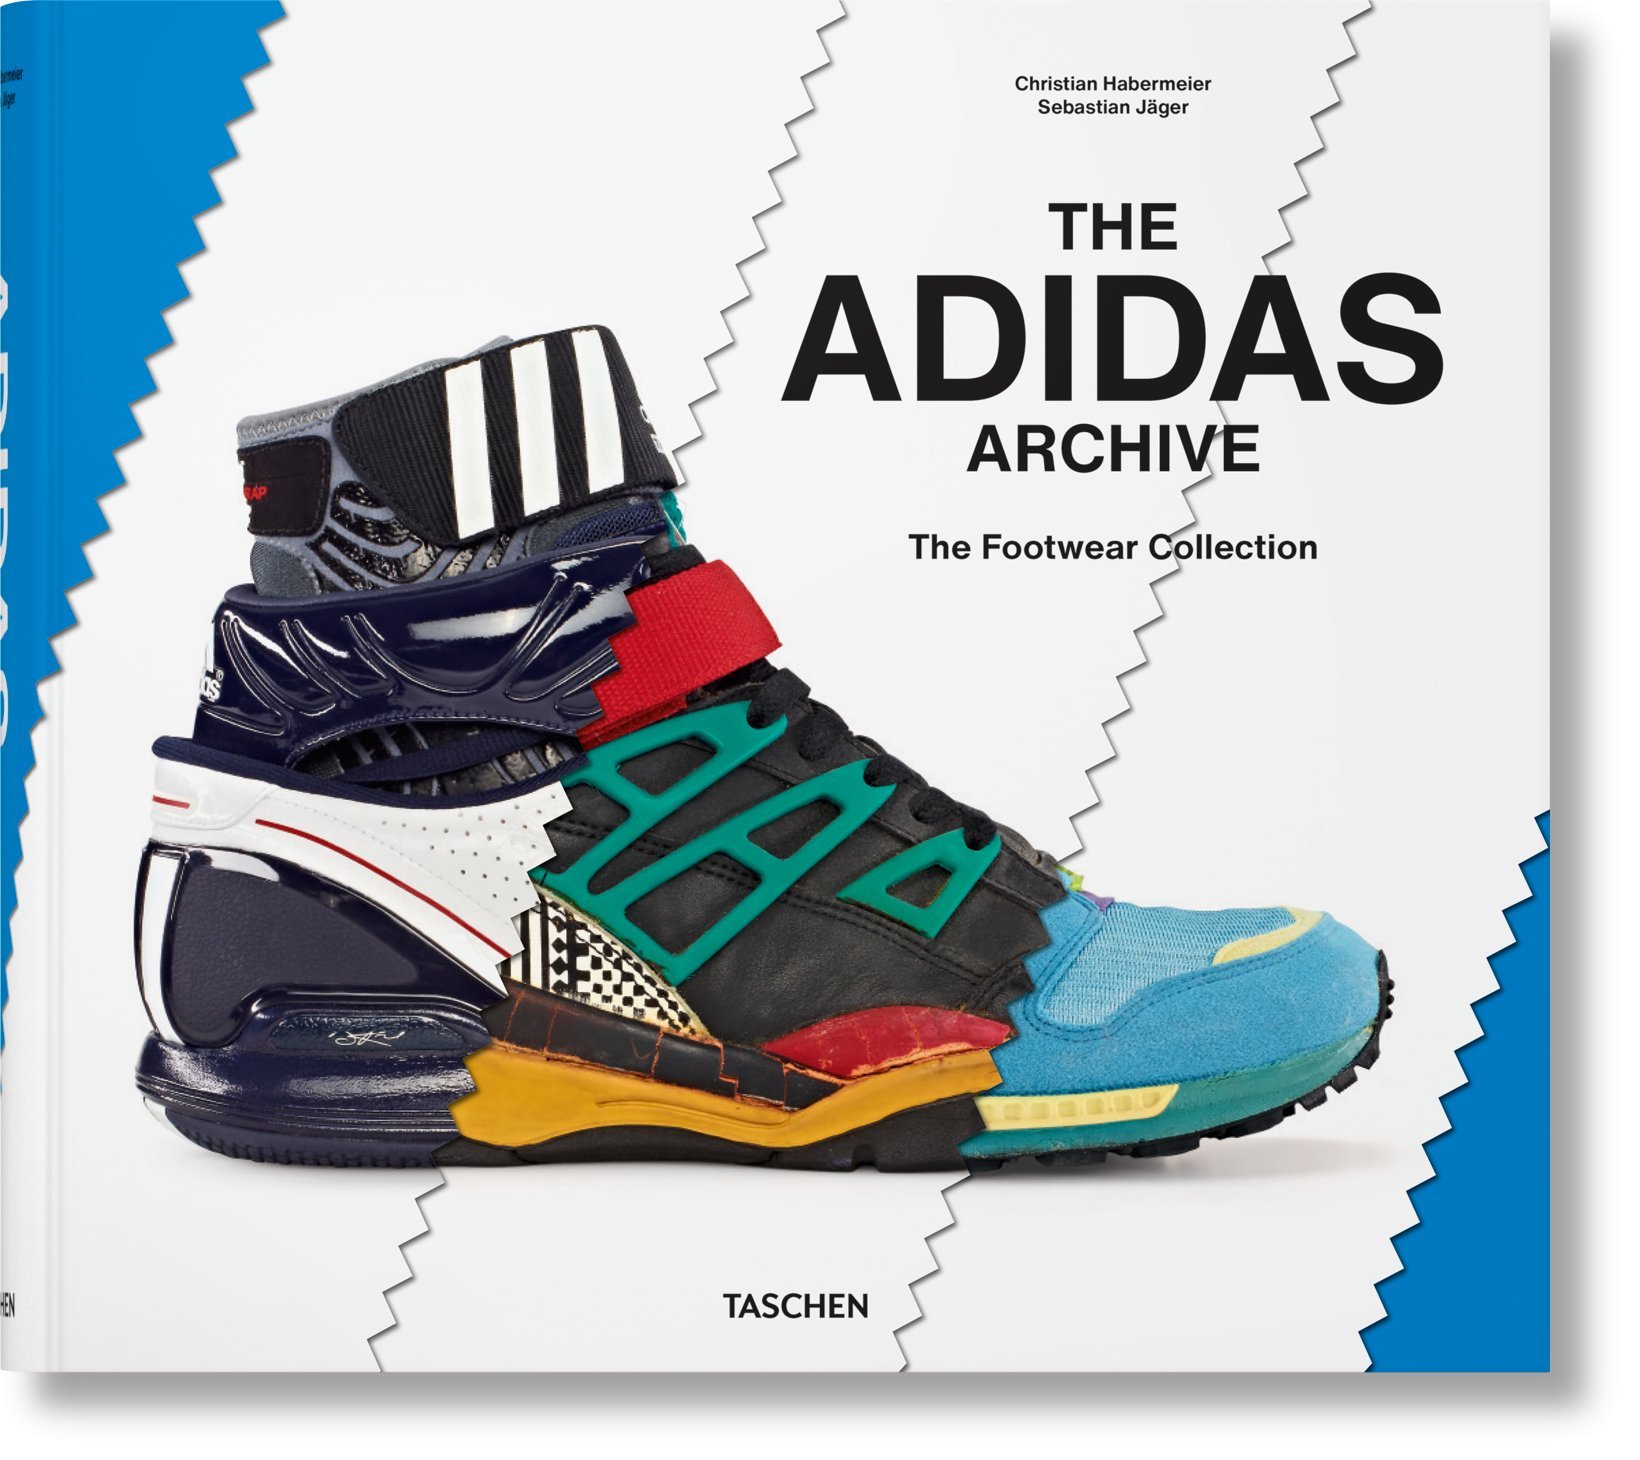 adidas sneakers history